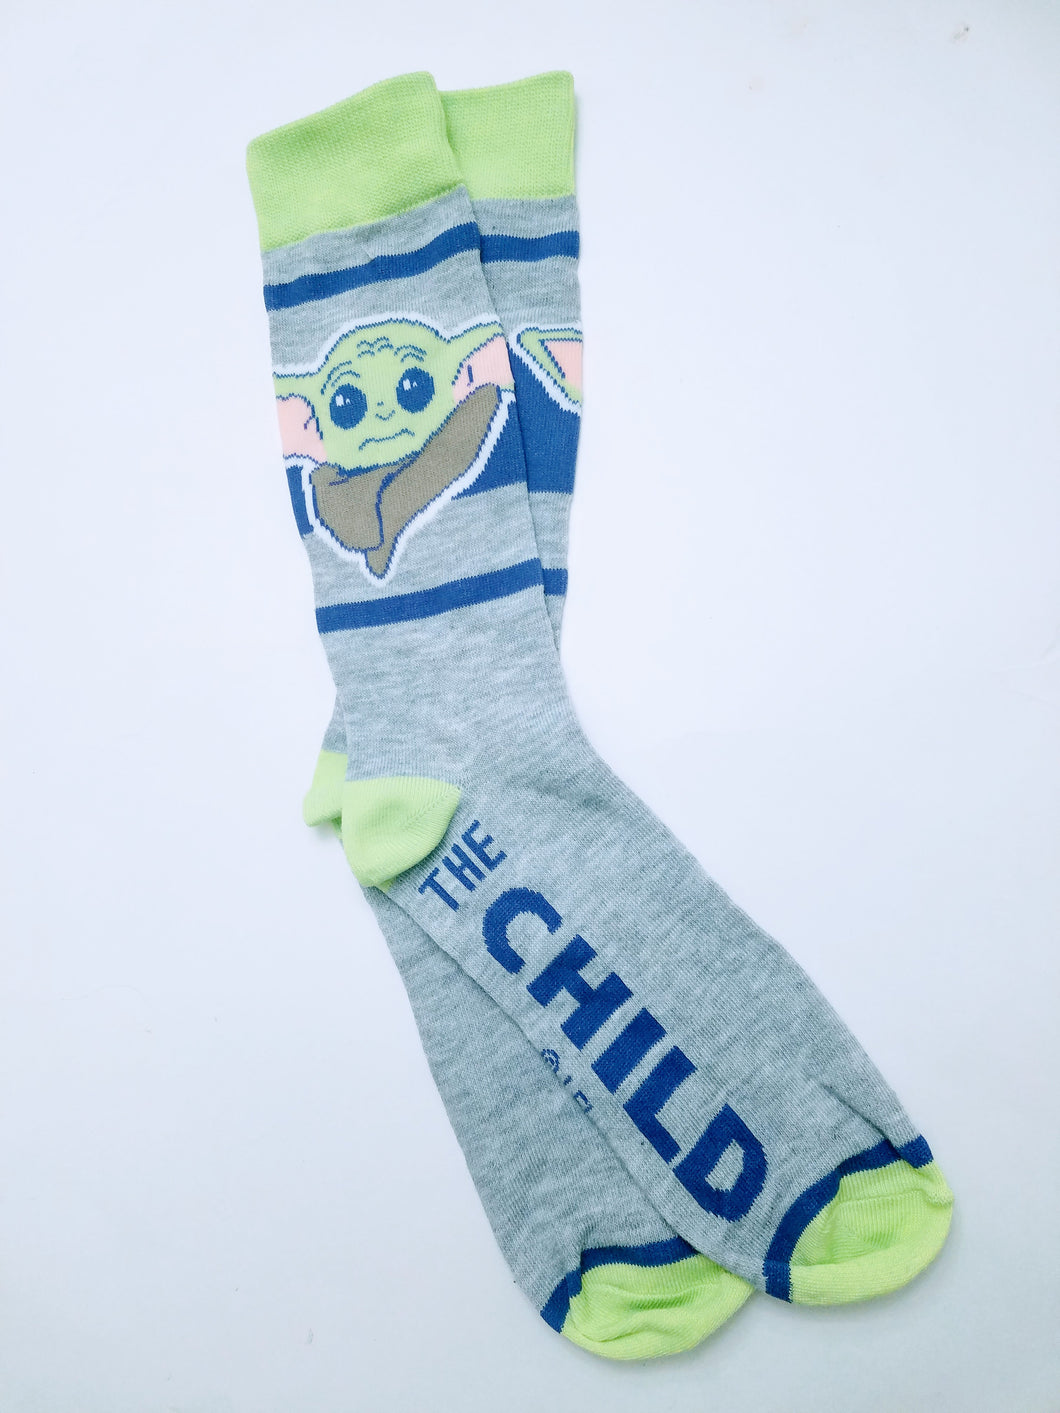 Baby Yoda The Child Star Wars Crew Socks